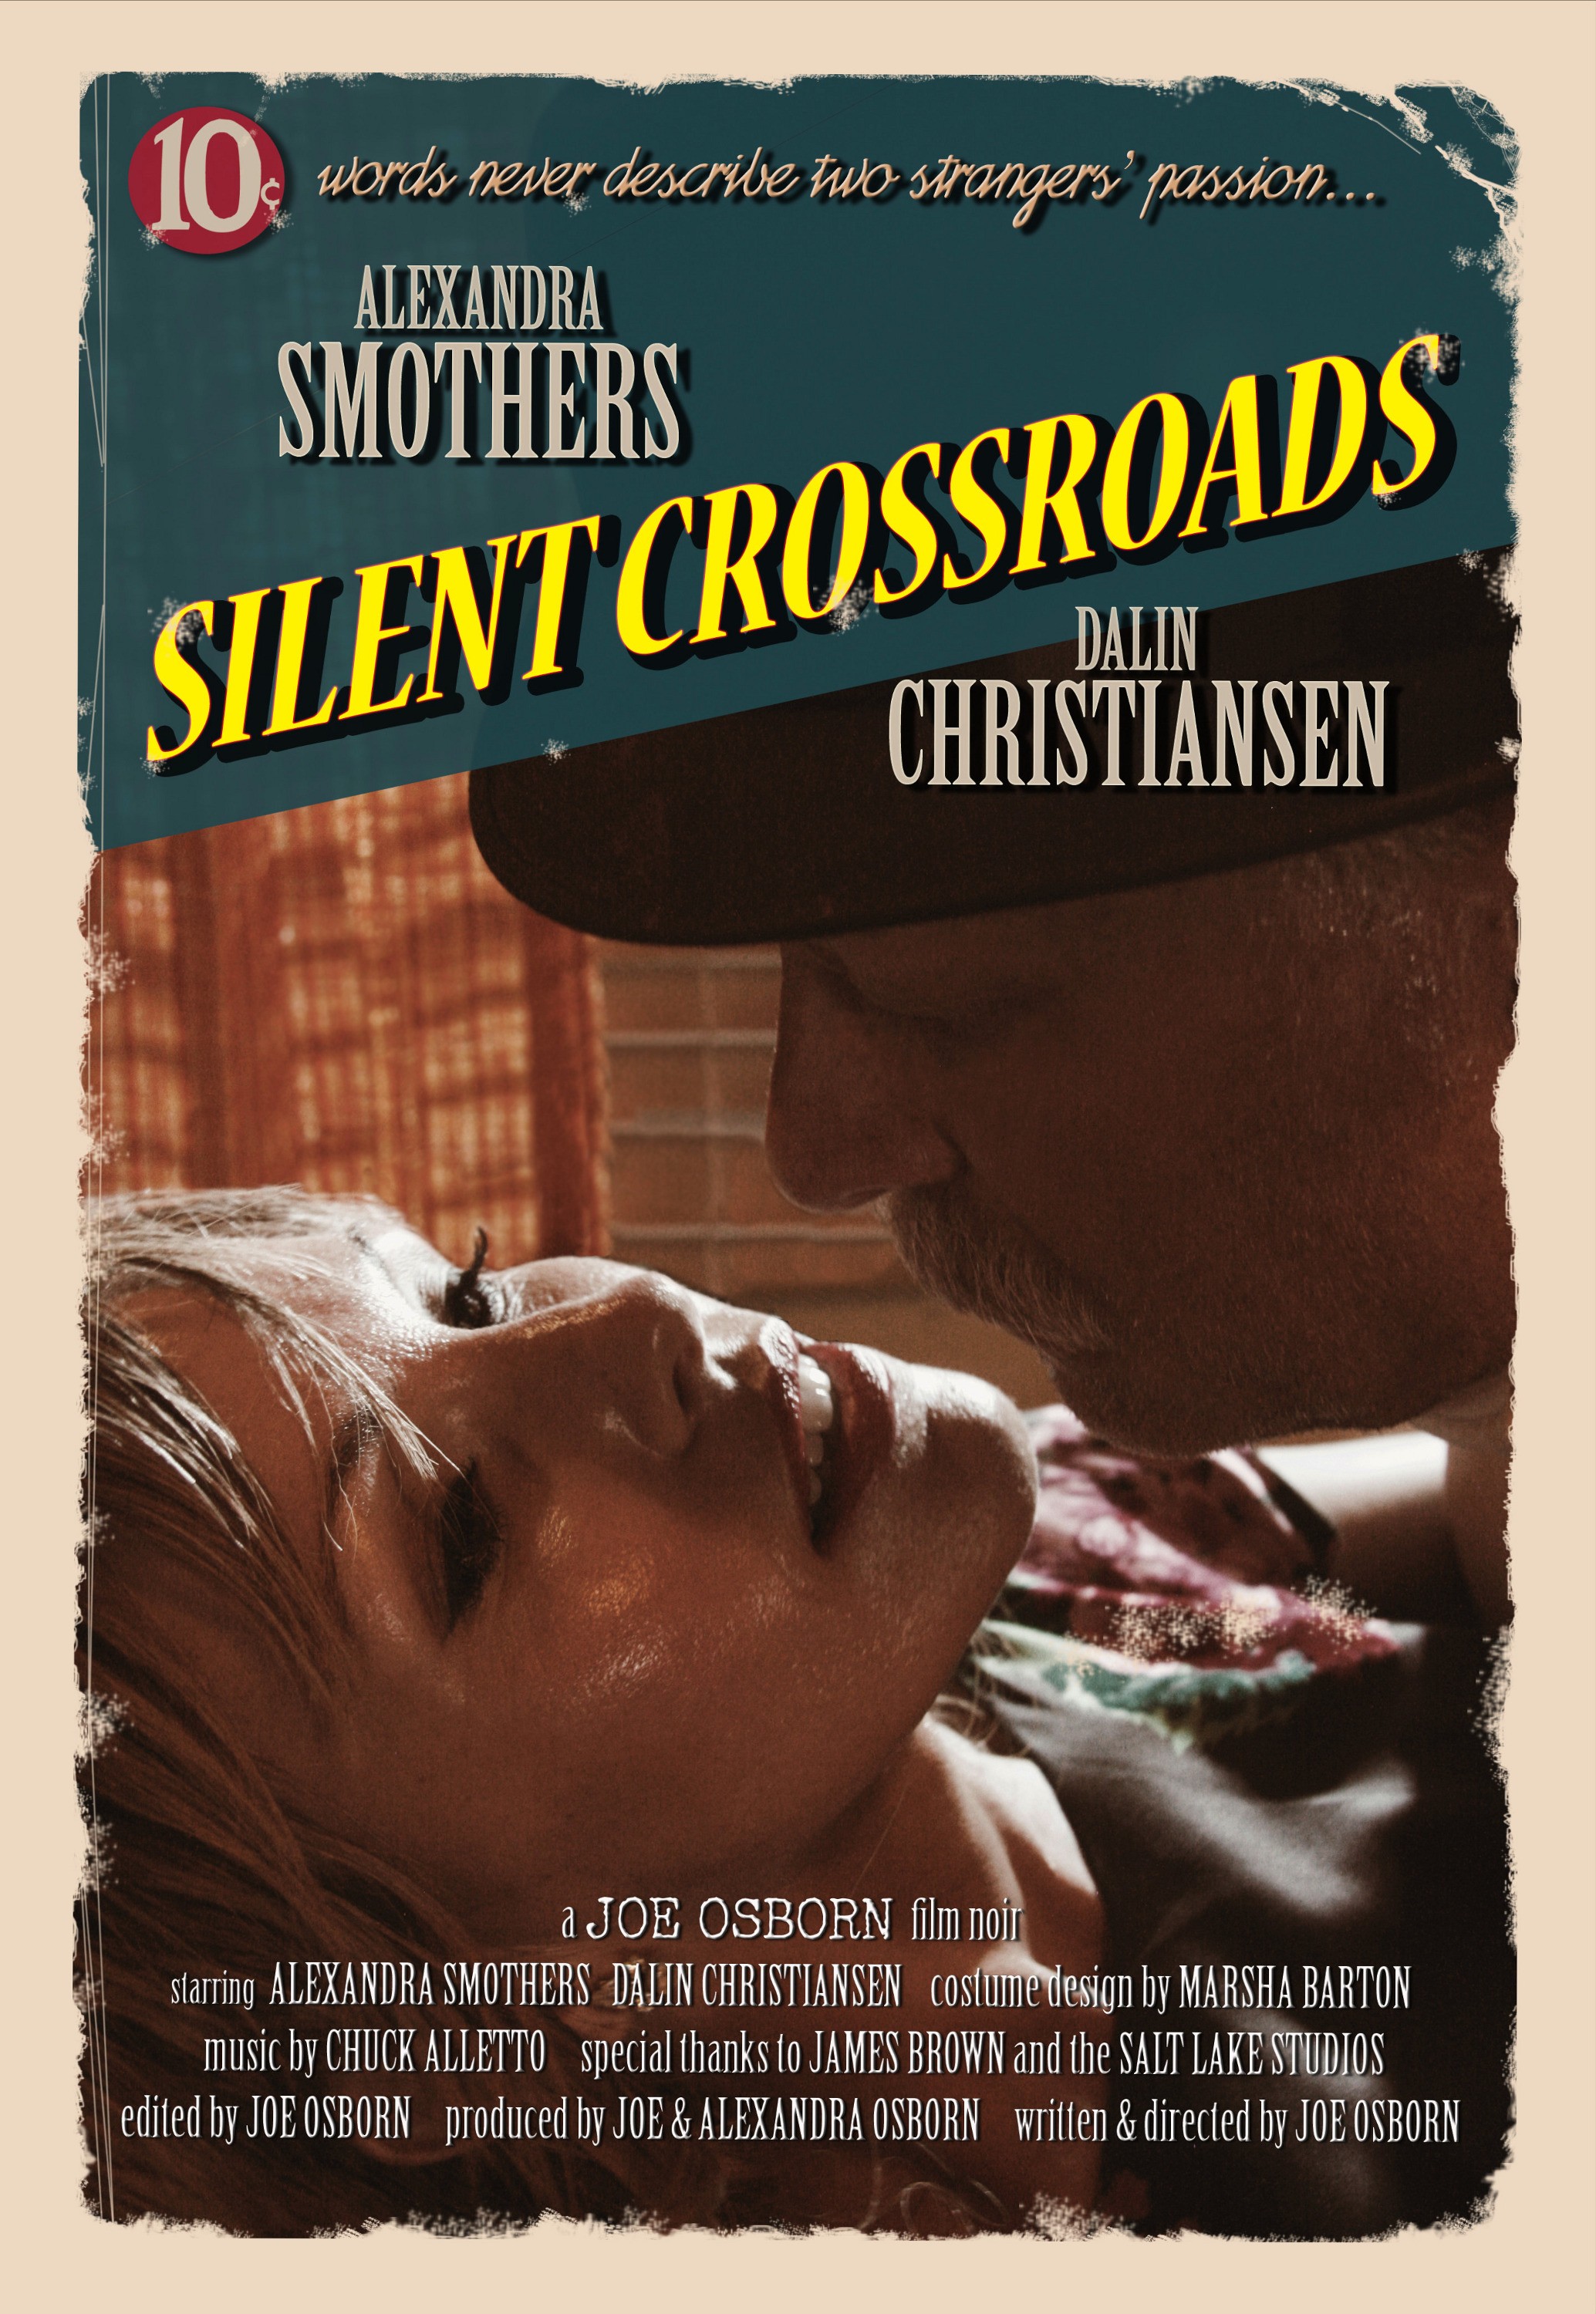 Mega Sized Movie Poster Image for Silent Crossroads